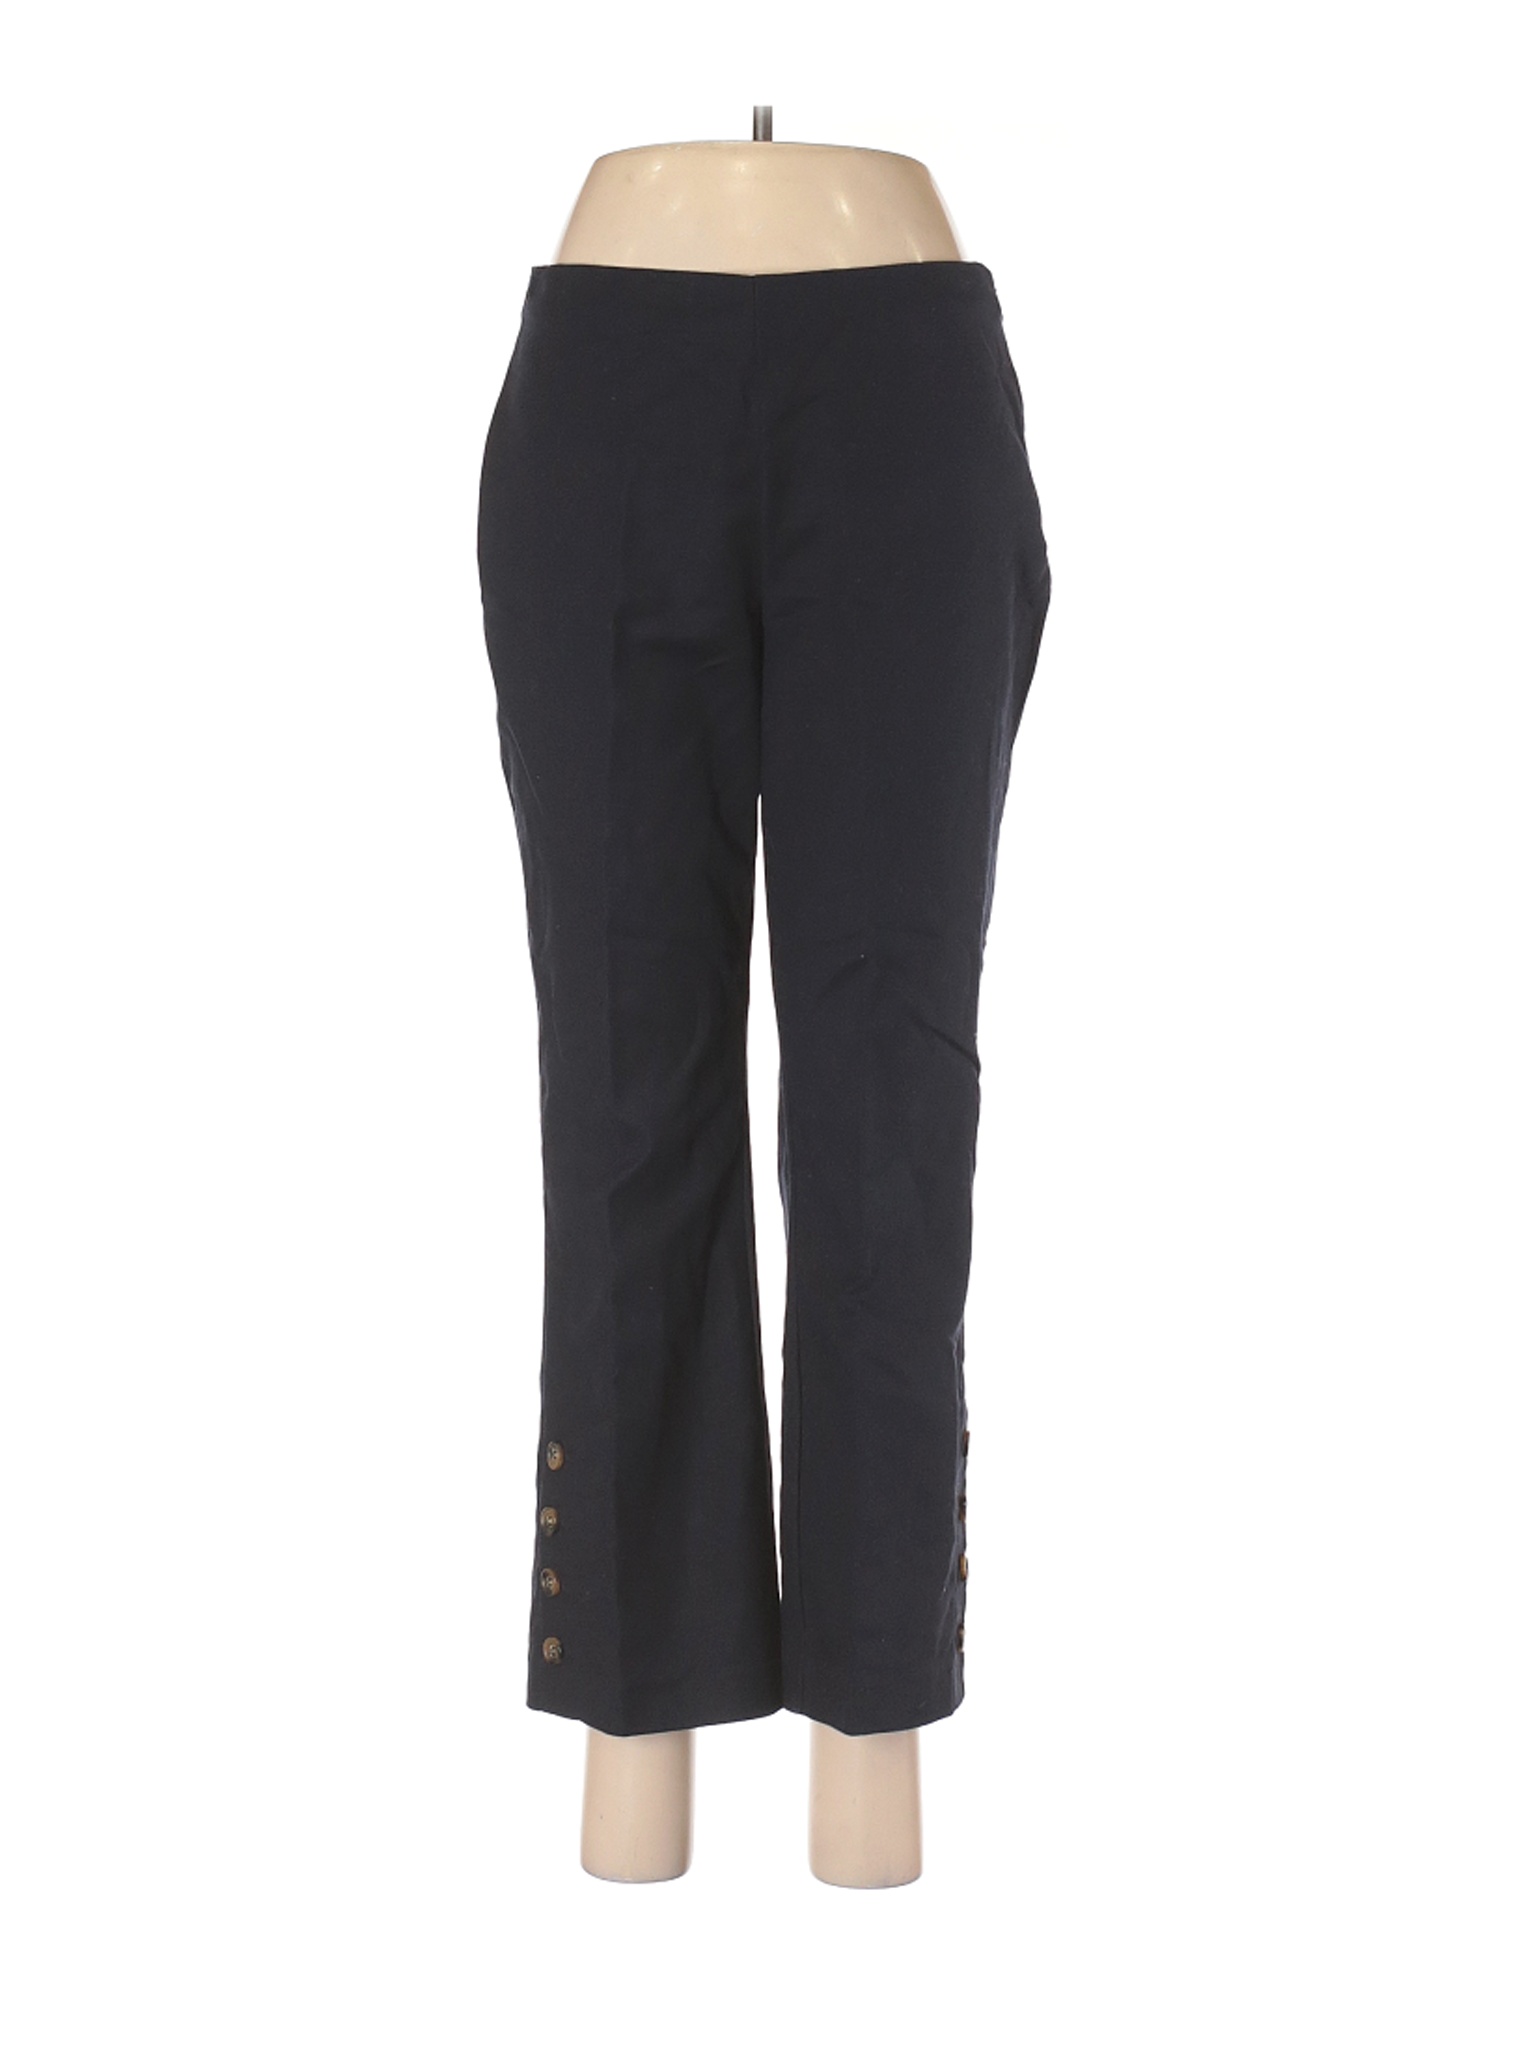 Crosby Women Black Dress Pants 8 | eBay